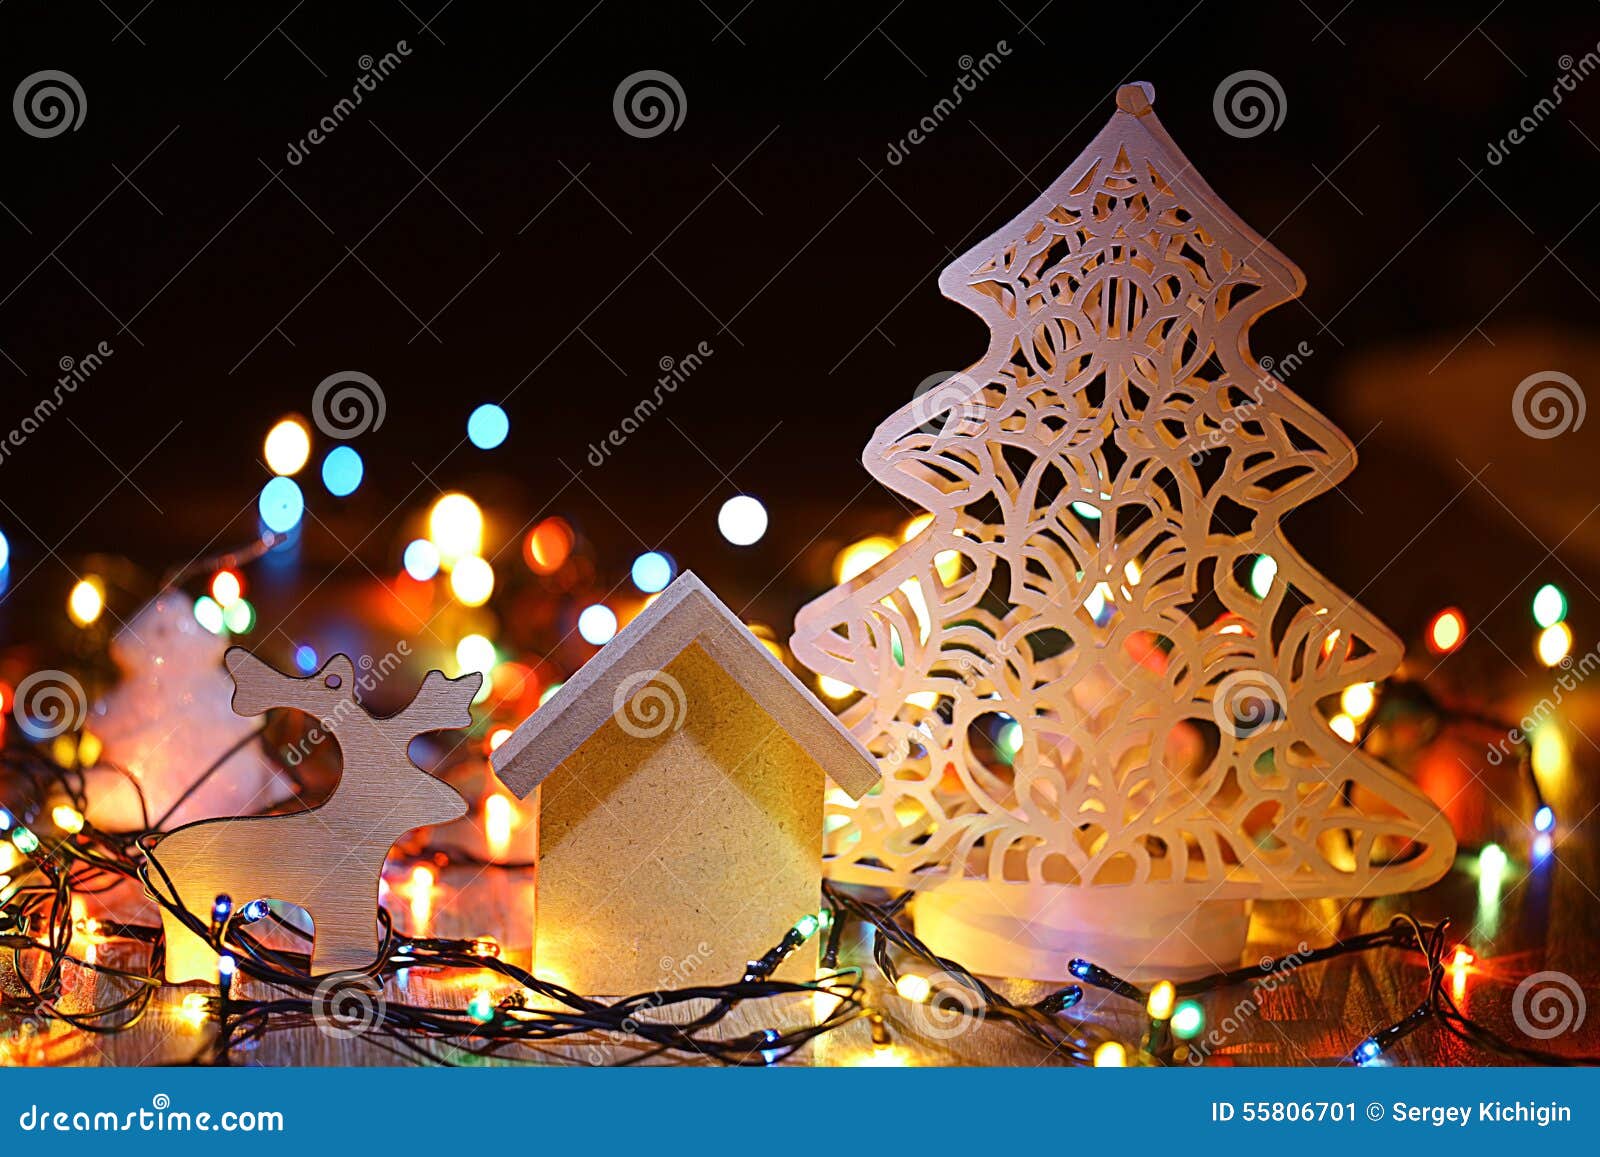 Decorazioni Natalizie Casalinghe.Decorazioni Casalinghe Di Natale Immagine Stock Immagine Di Gennaio Gingerbread 55806701